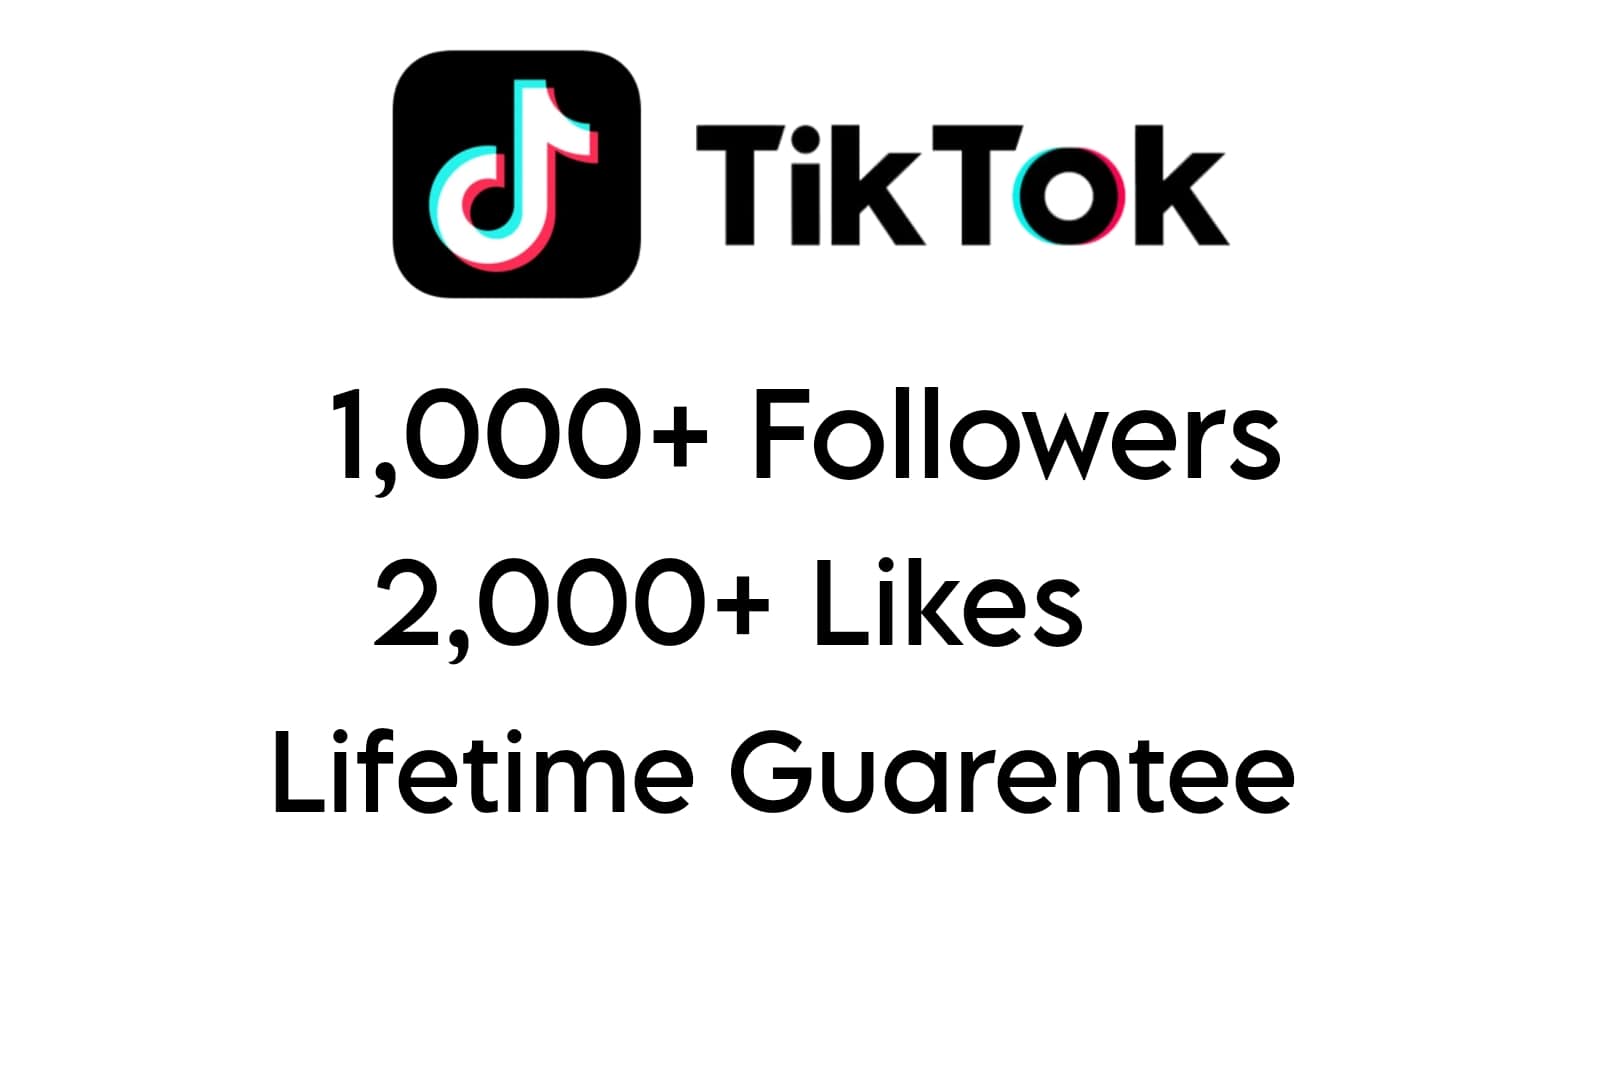 Tiktok 1,000+ Followers and 2,000+ Likes, High-quality, Lifetime Guarentee.